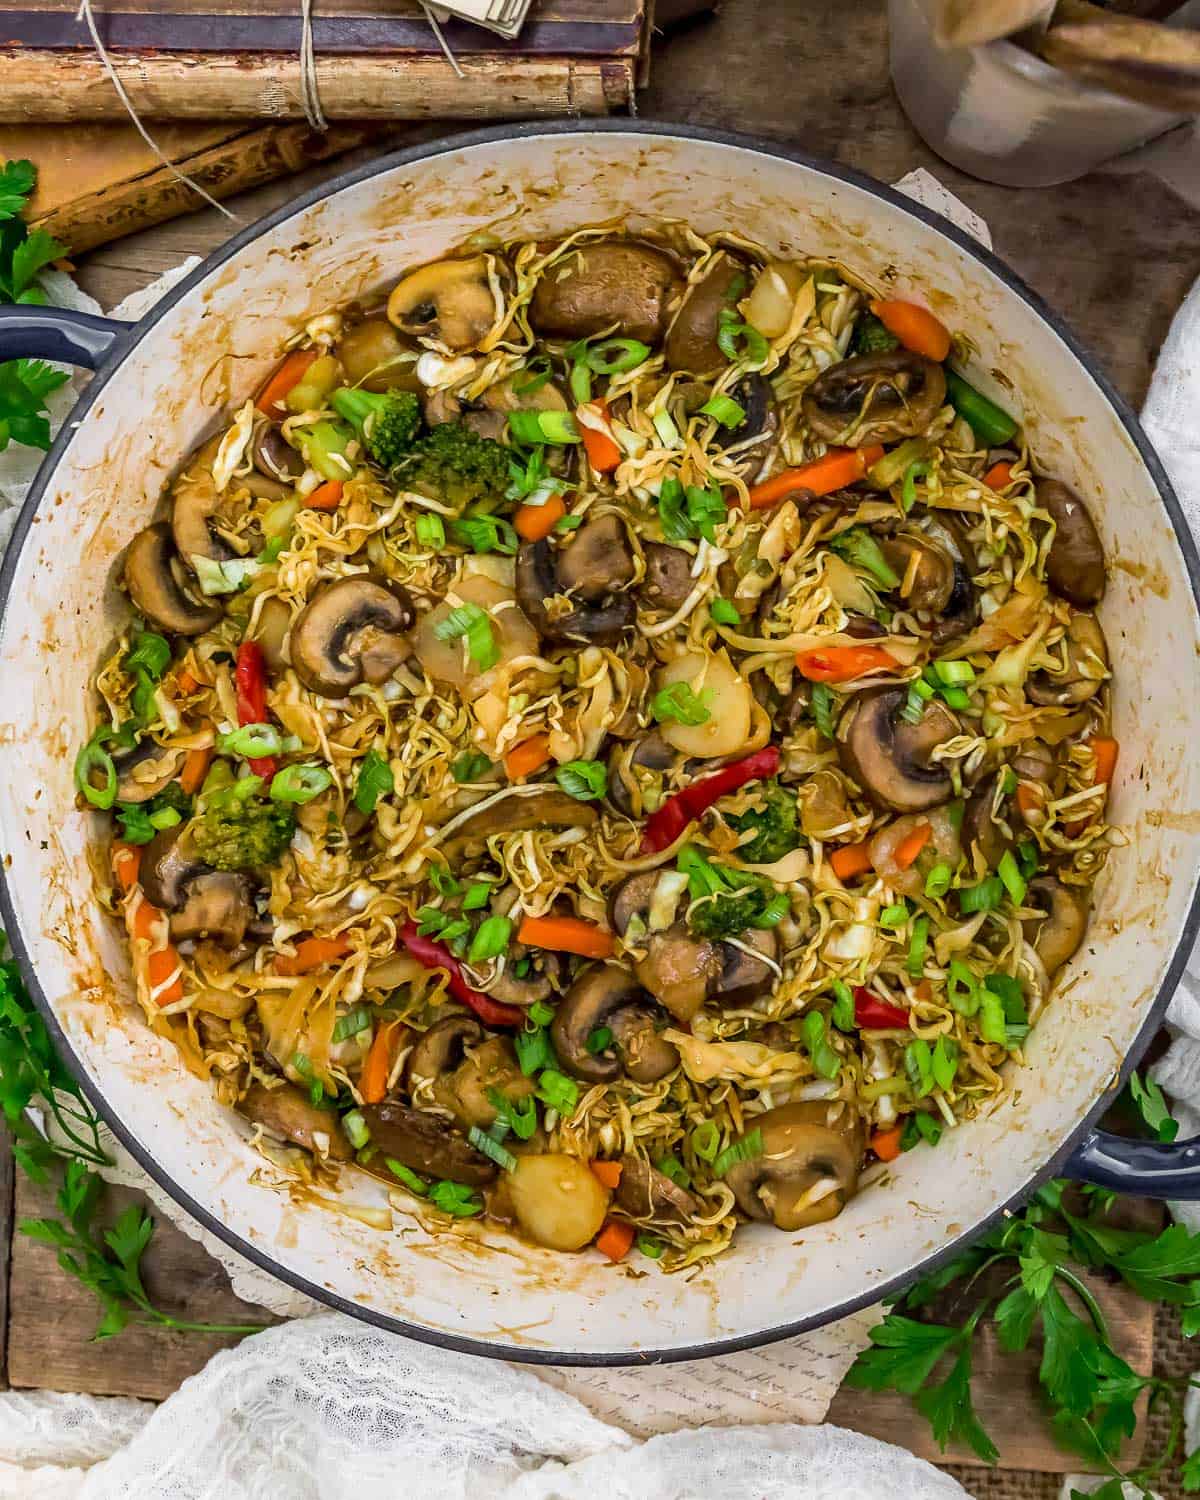 Skillet with Asian Mushroom Cabbage Stir Fry